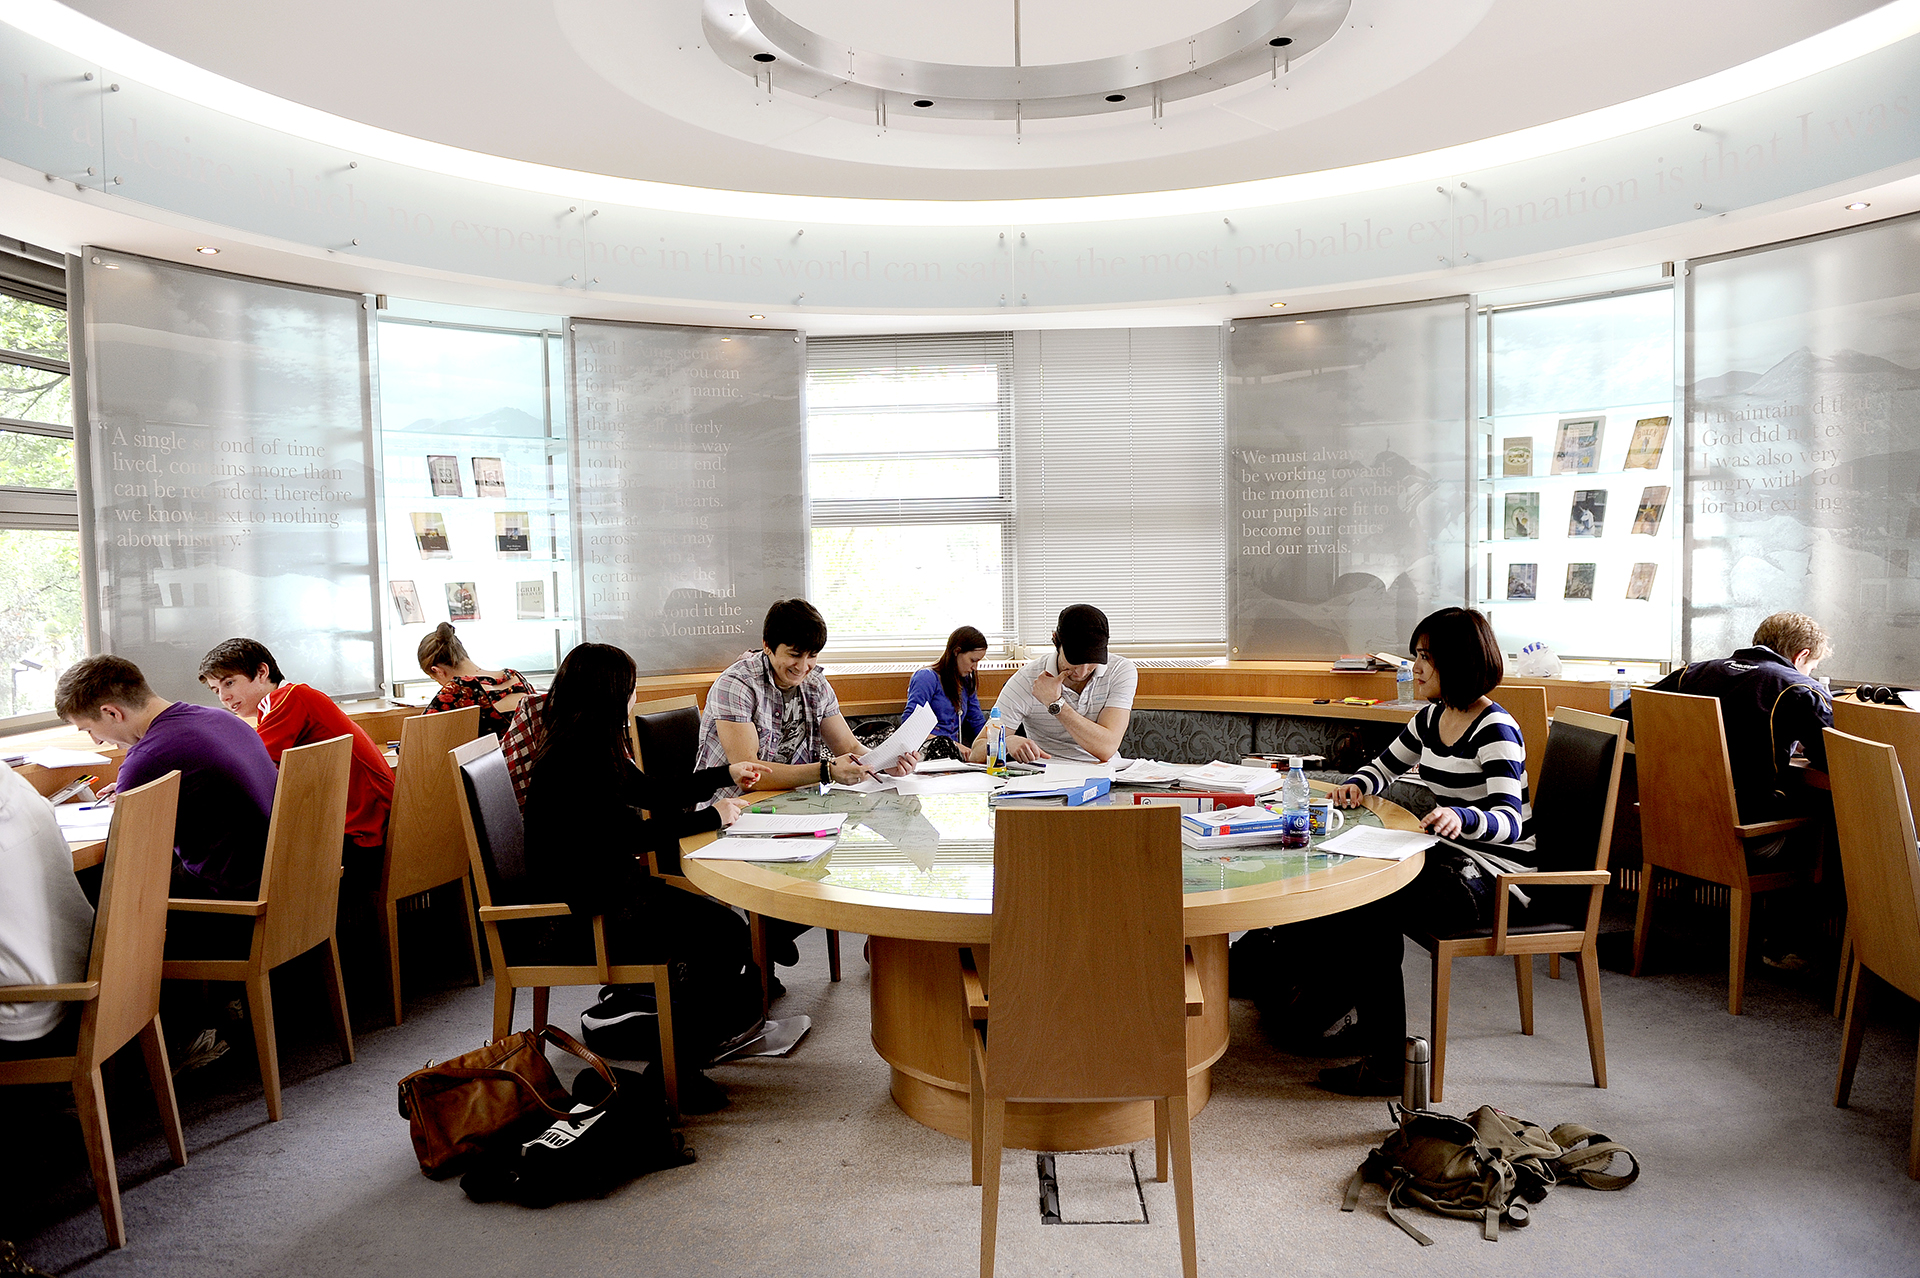 Students in a Queen's University Belfast study space